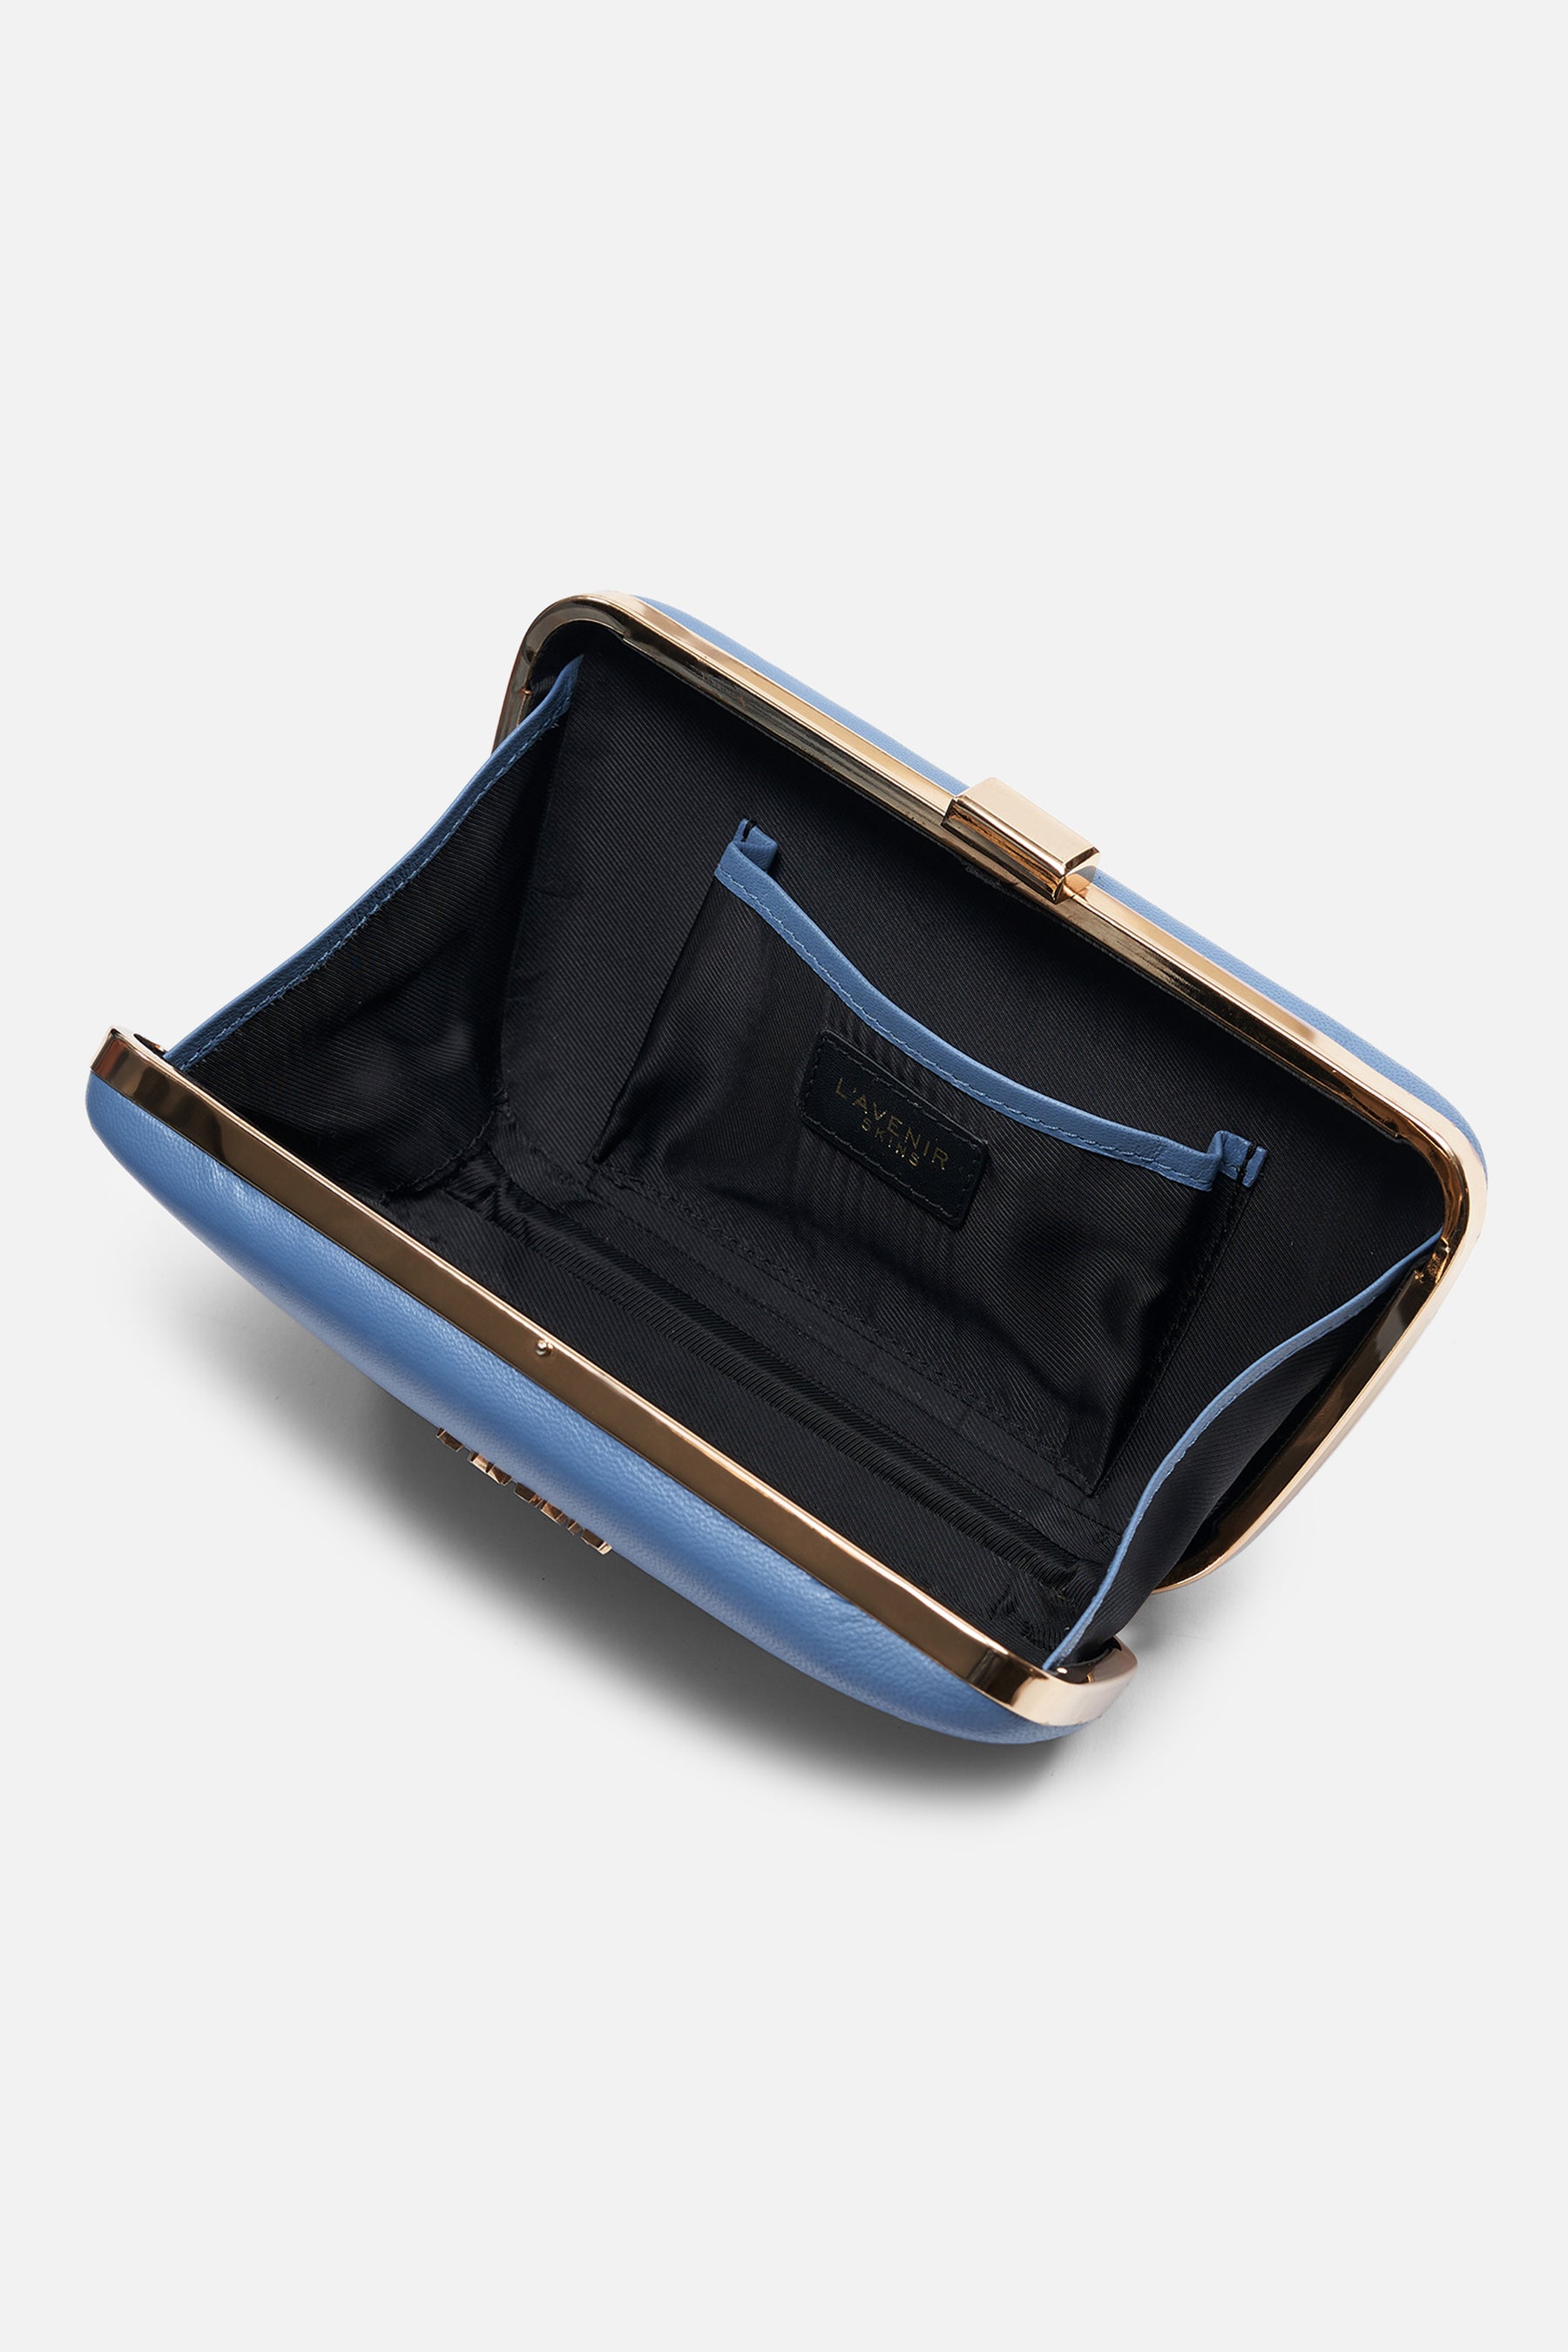 Camila - Leather Box Clutch Bag - Smoke Blue